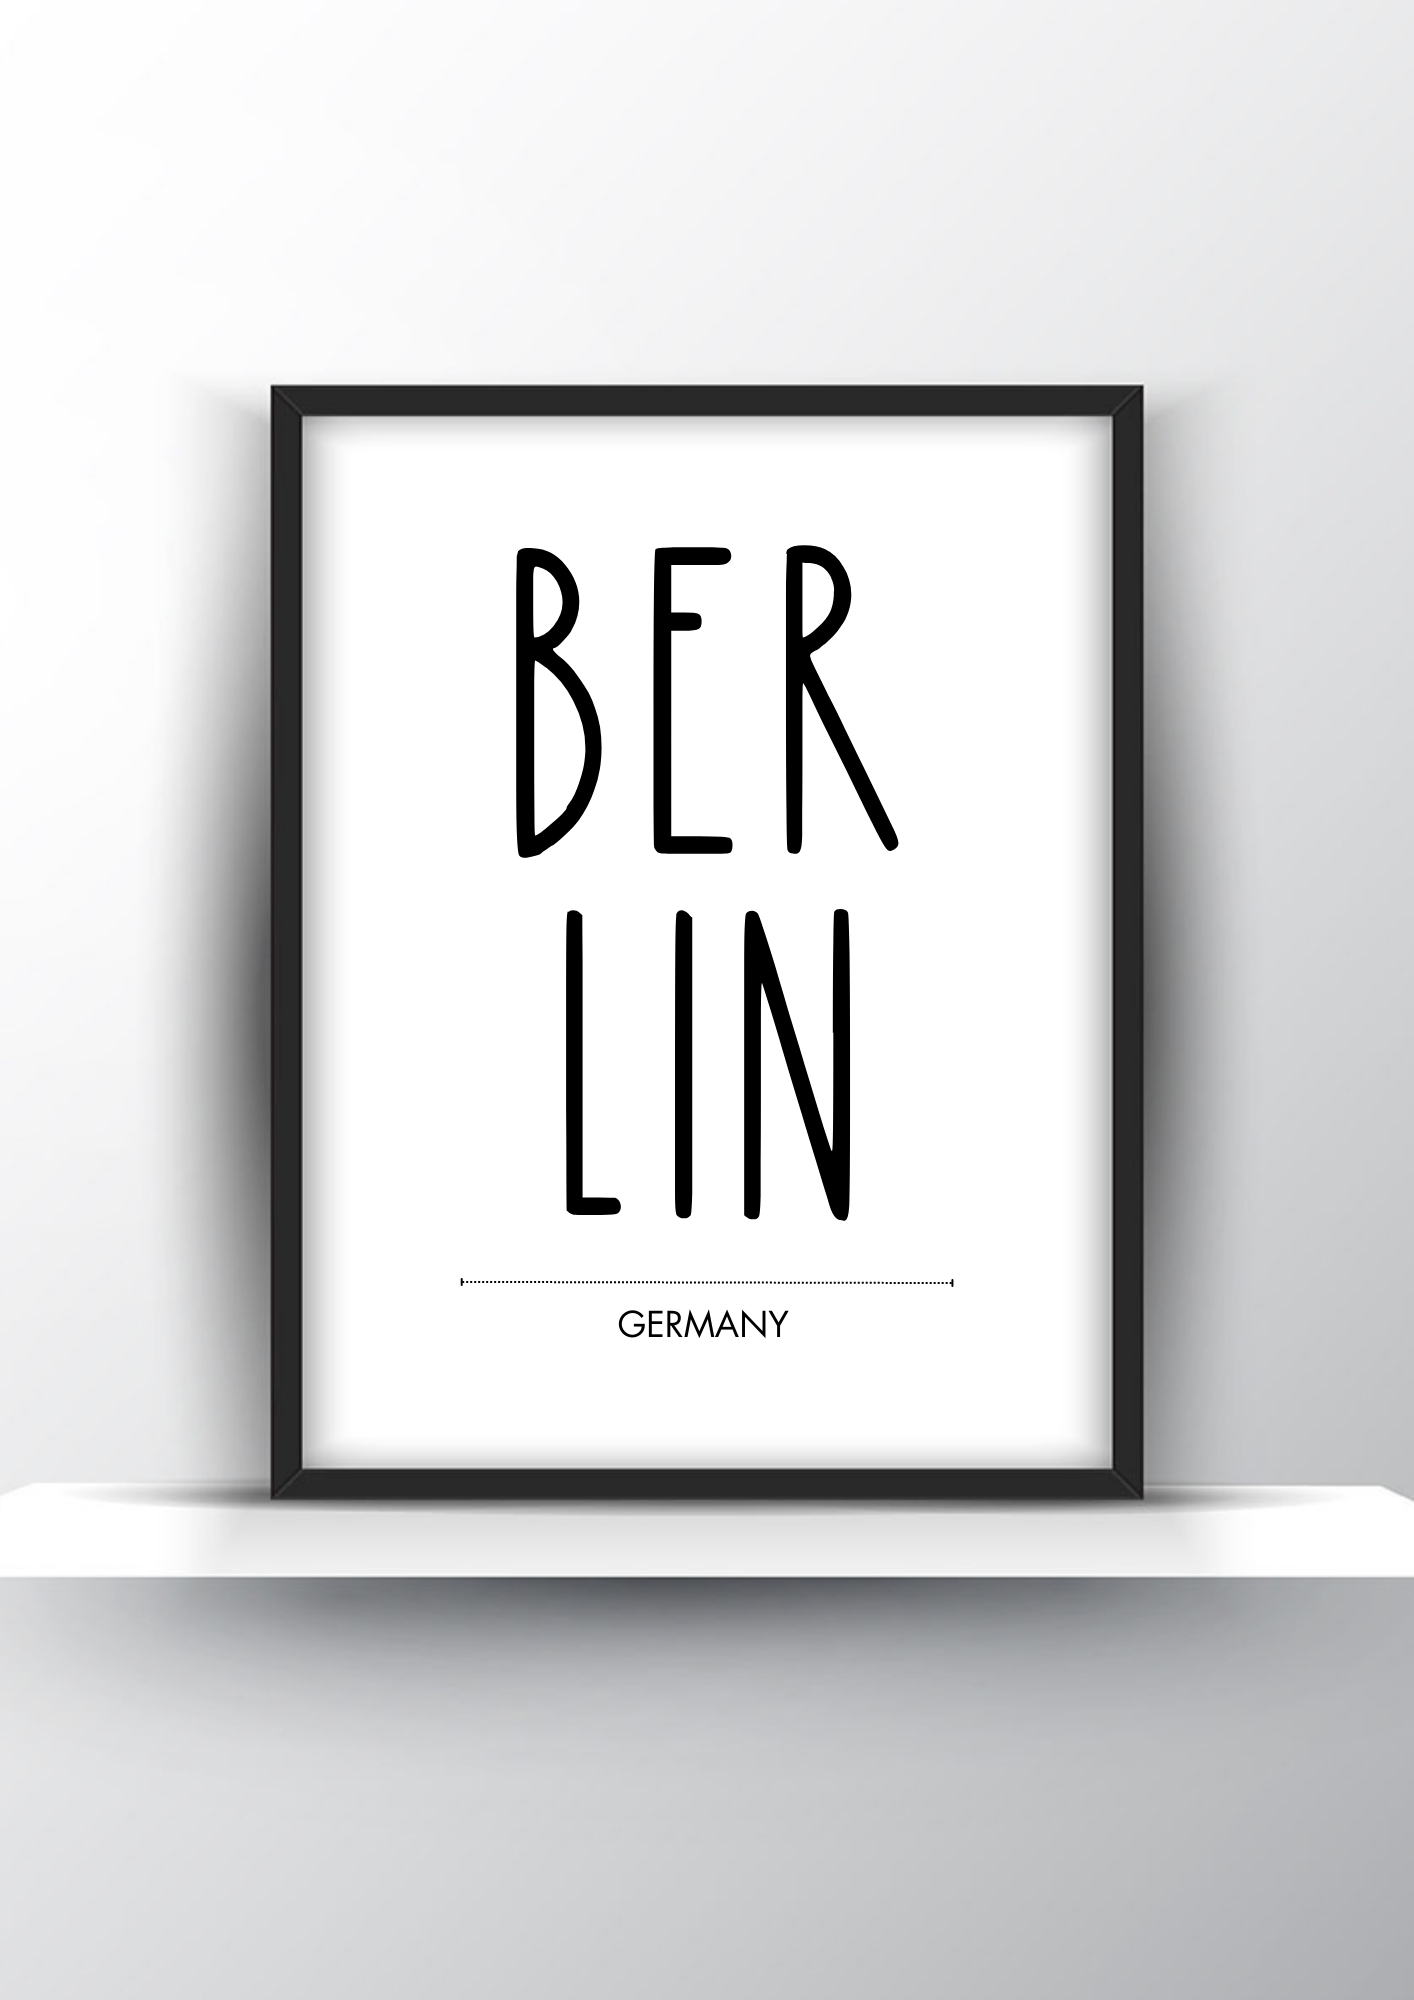 Berlin Germany Printable Wall Art - Minimalist Typography Poster - Home Decor - Digital Download